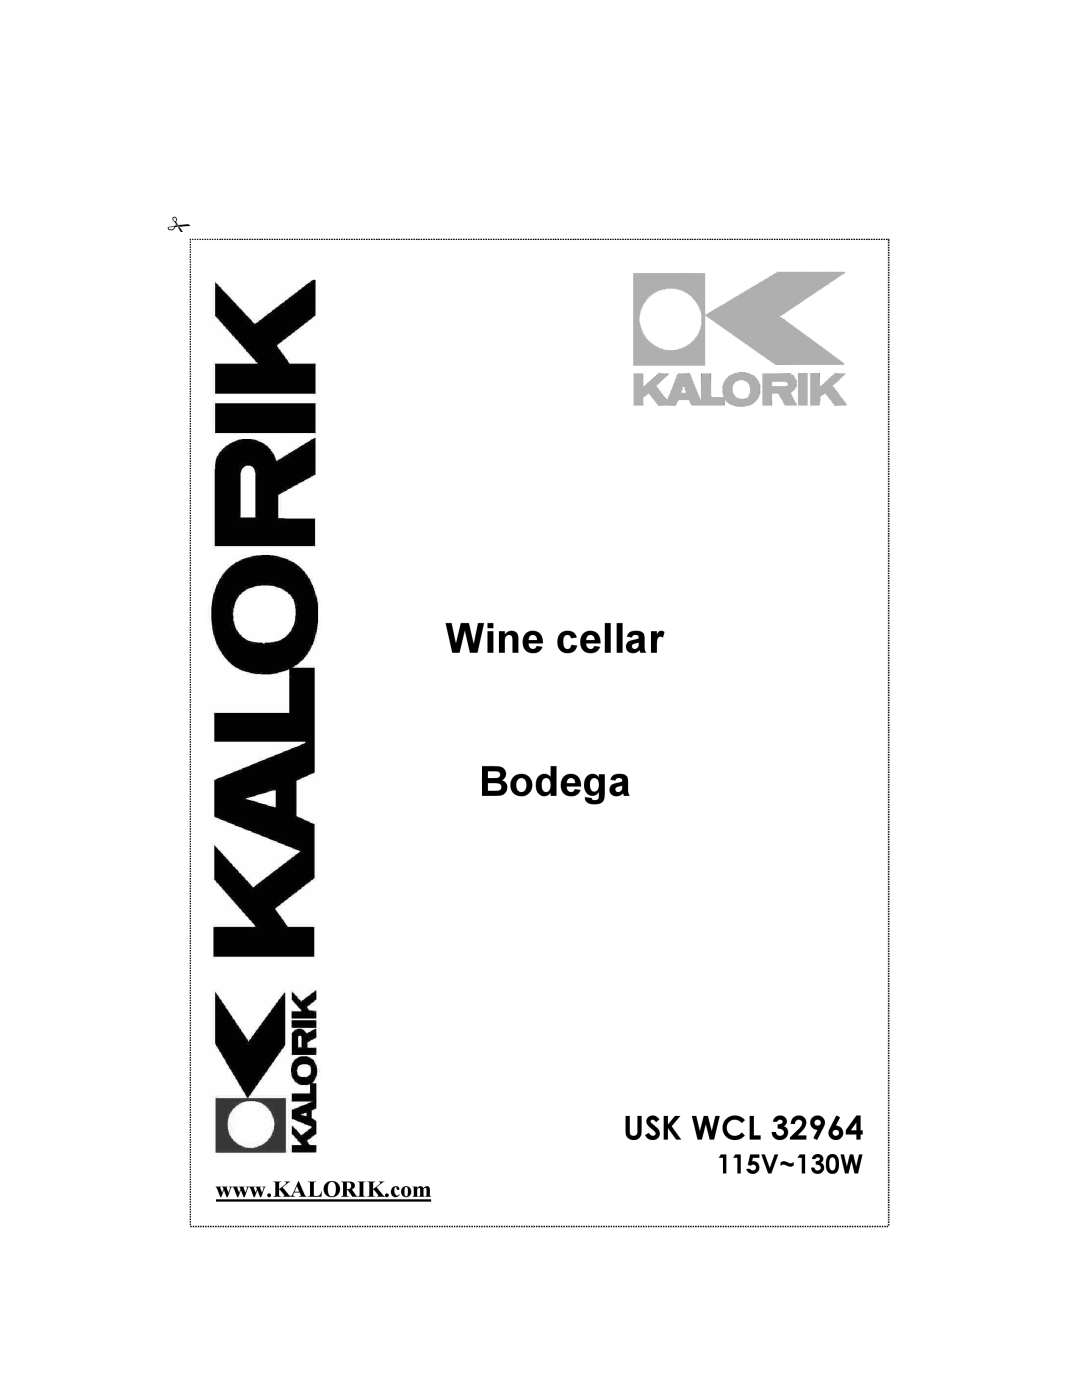 Kalorik USK WCL 32964 manual 115V~130W, Wine cellar Bodega, Usk Wcl 